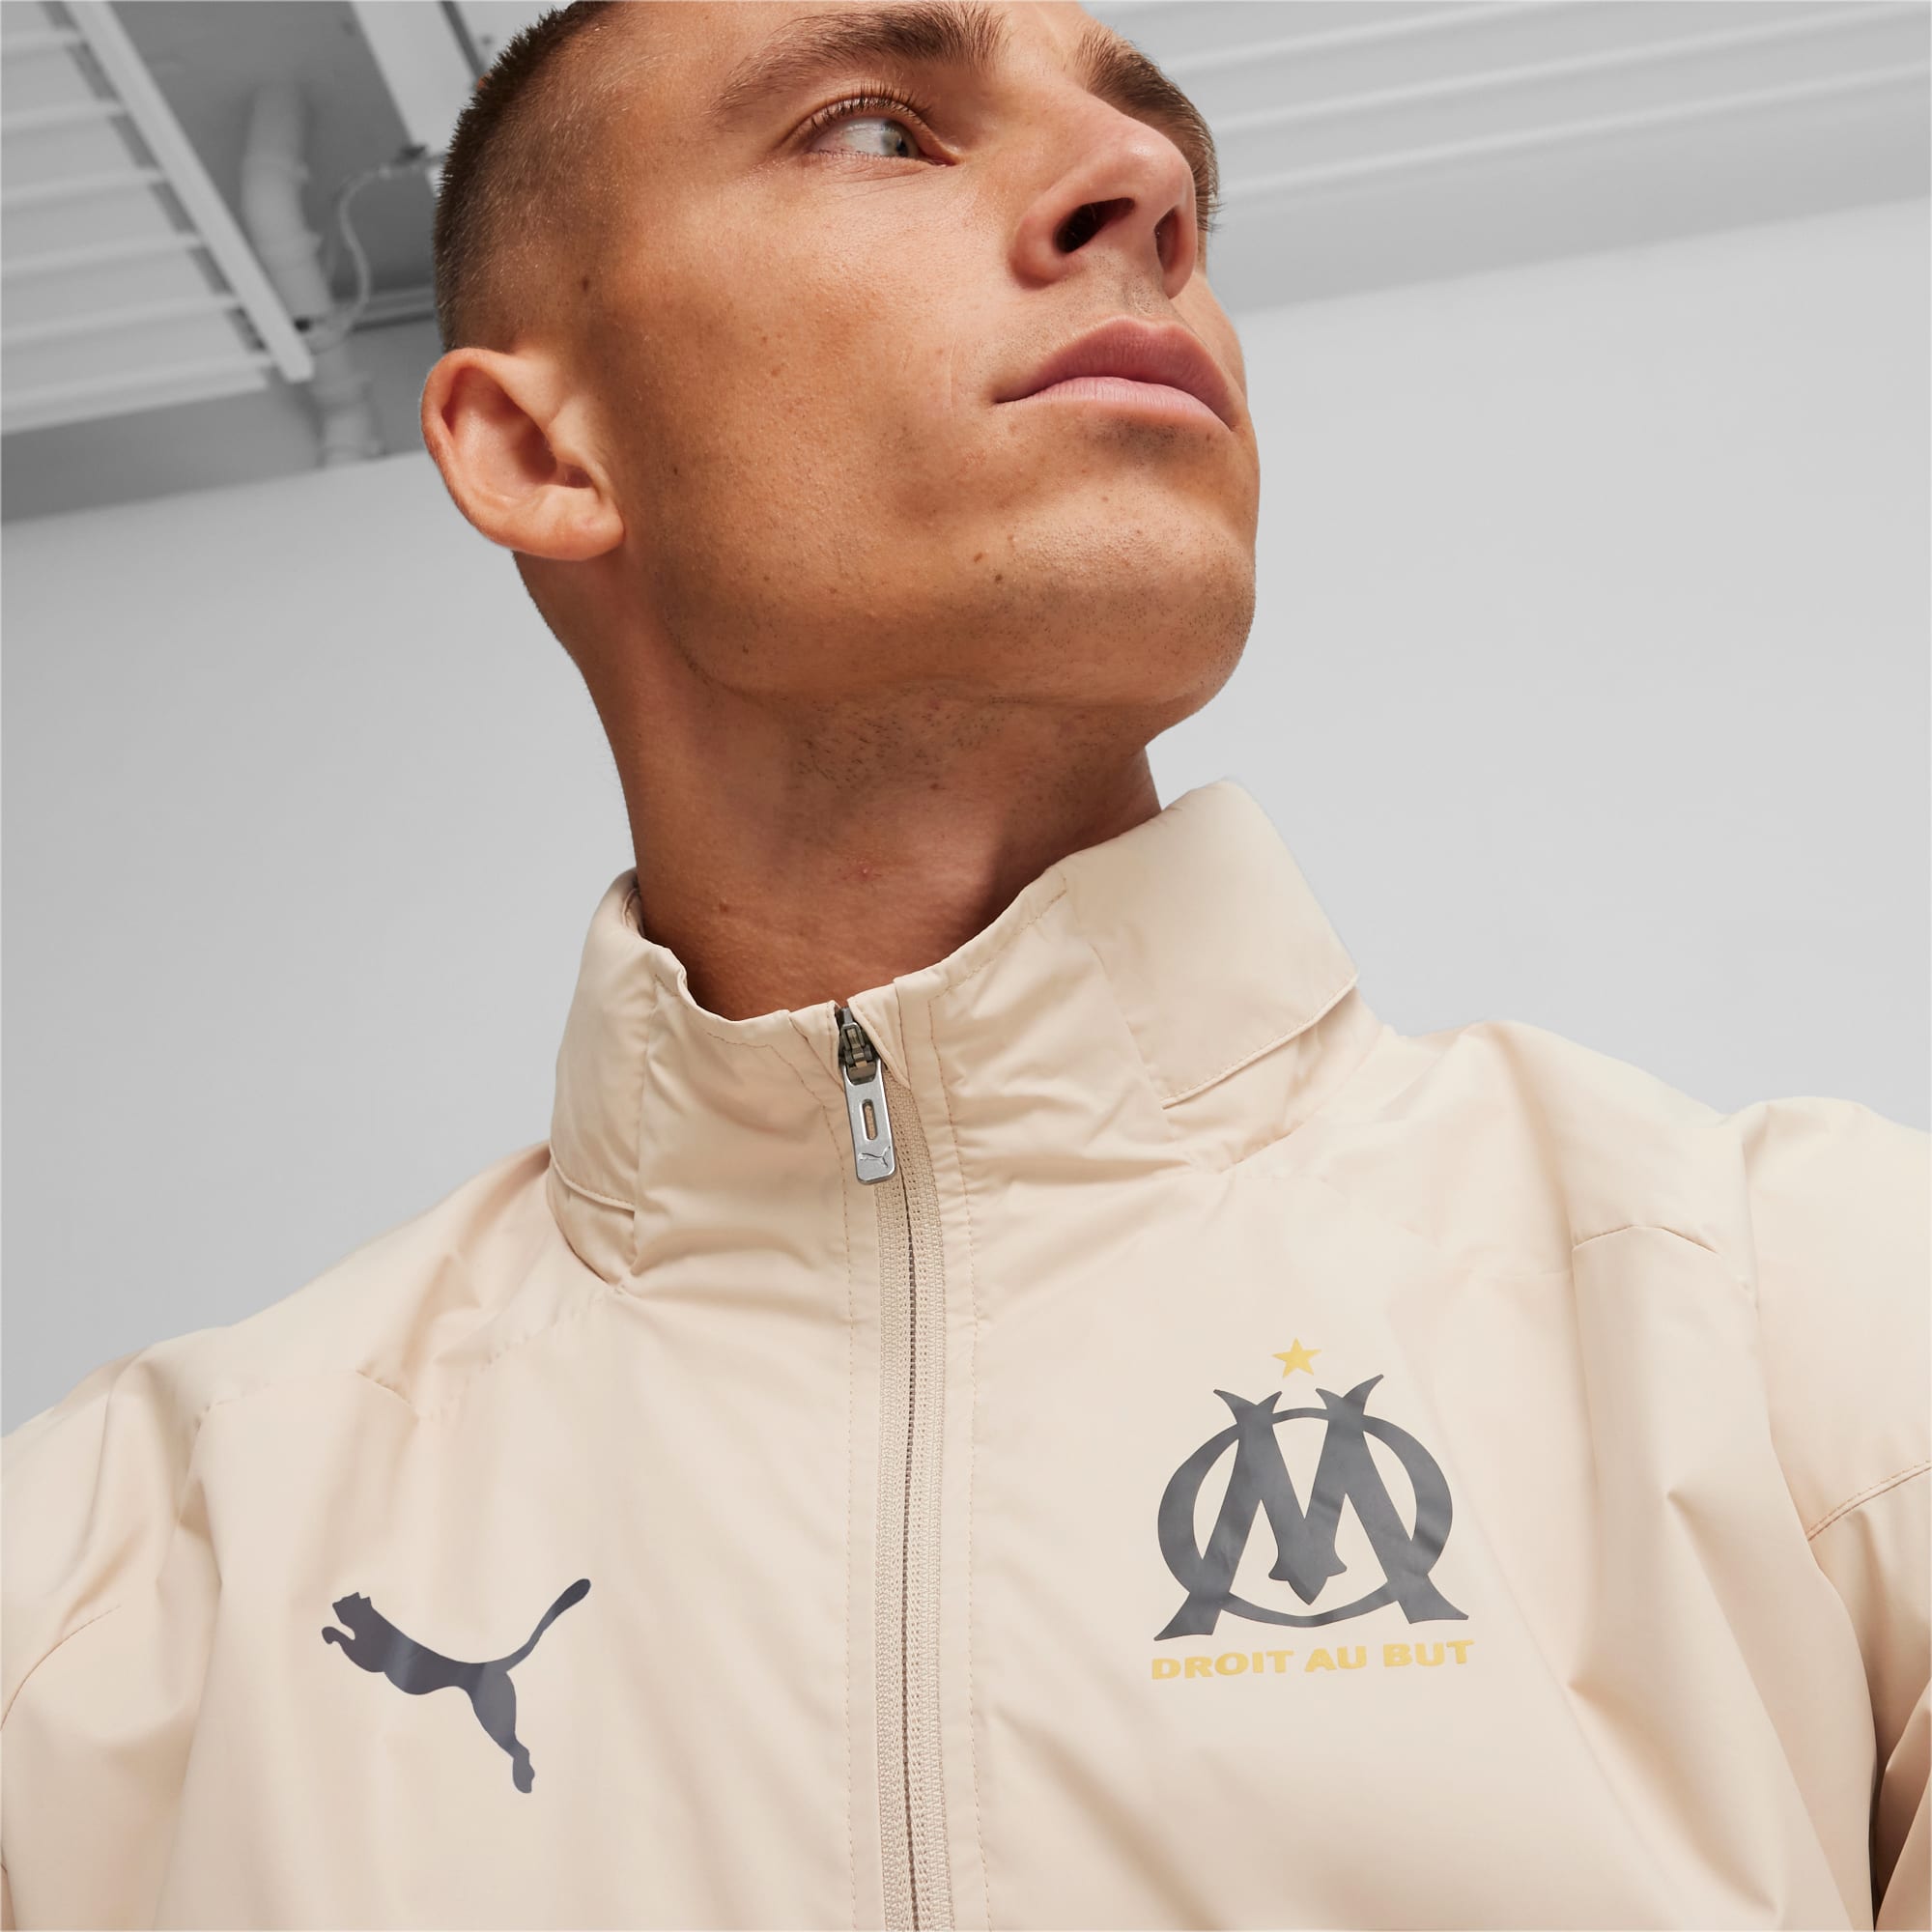 Men's PUMA Olympique De Marseille Football All-Weather Jacket, Granola/Sand Dune, Size M, Clothing